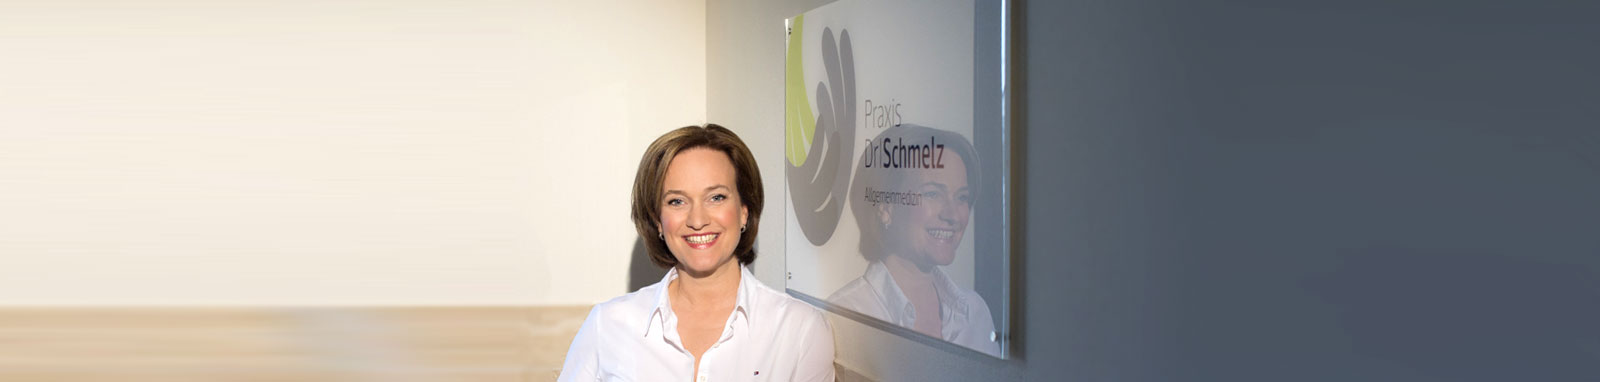 Dr.med. Susanne Schmelz